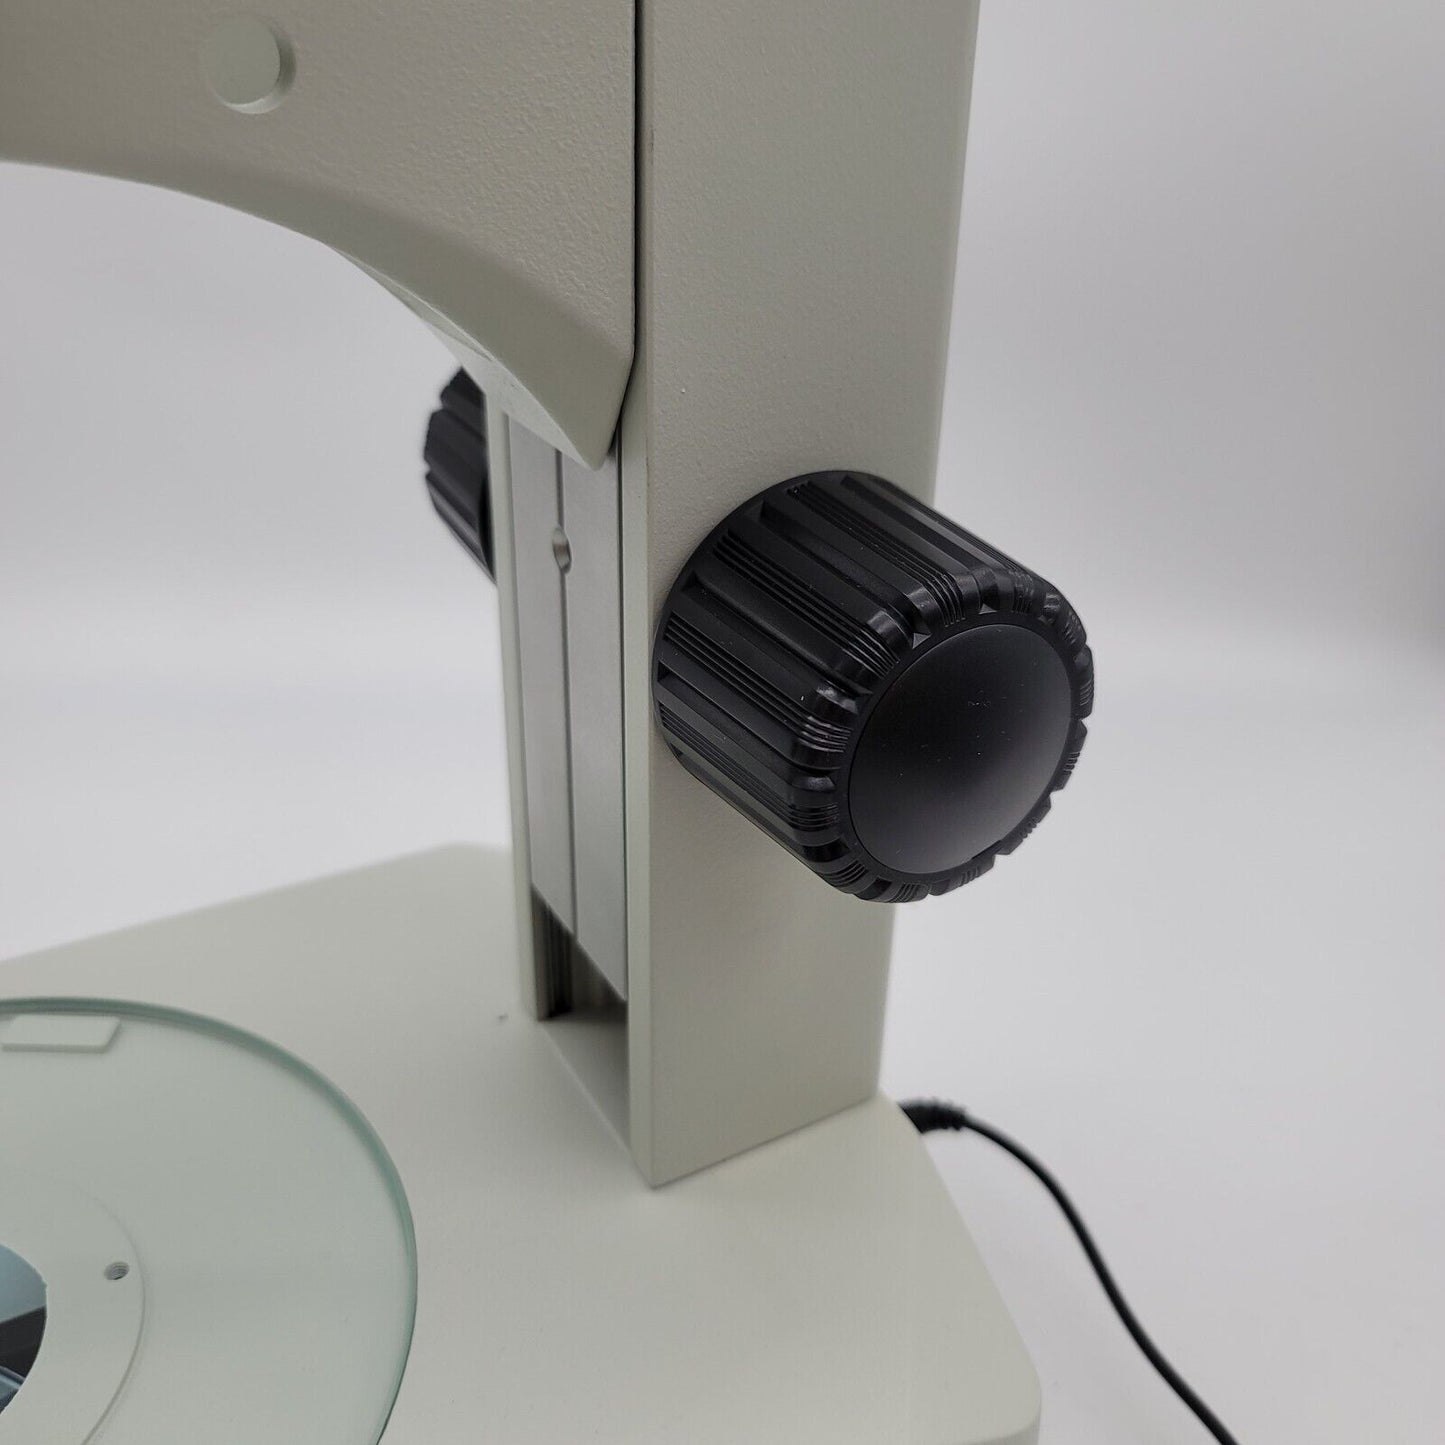 Nikon Microscope SMZ1000 Stereoscope with Mirror Base - microscopemarketplace